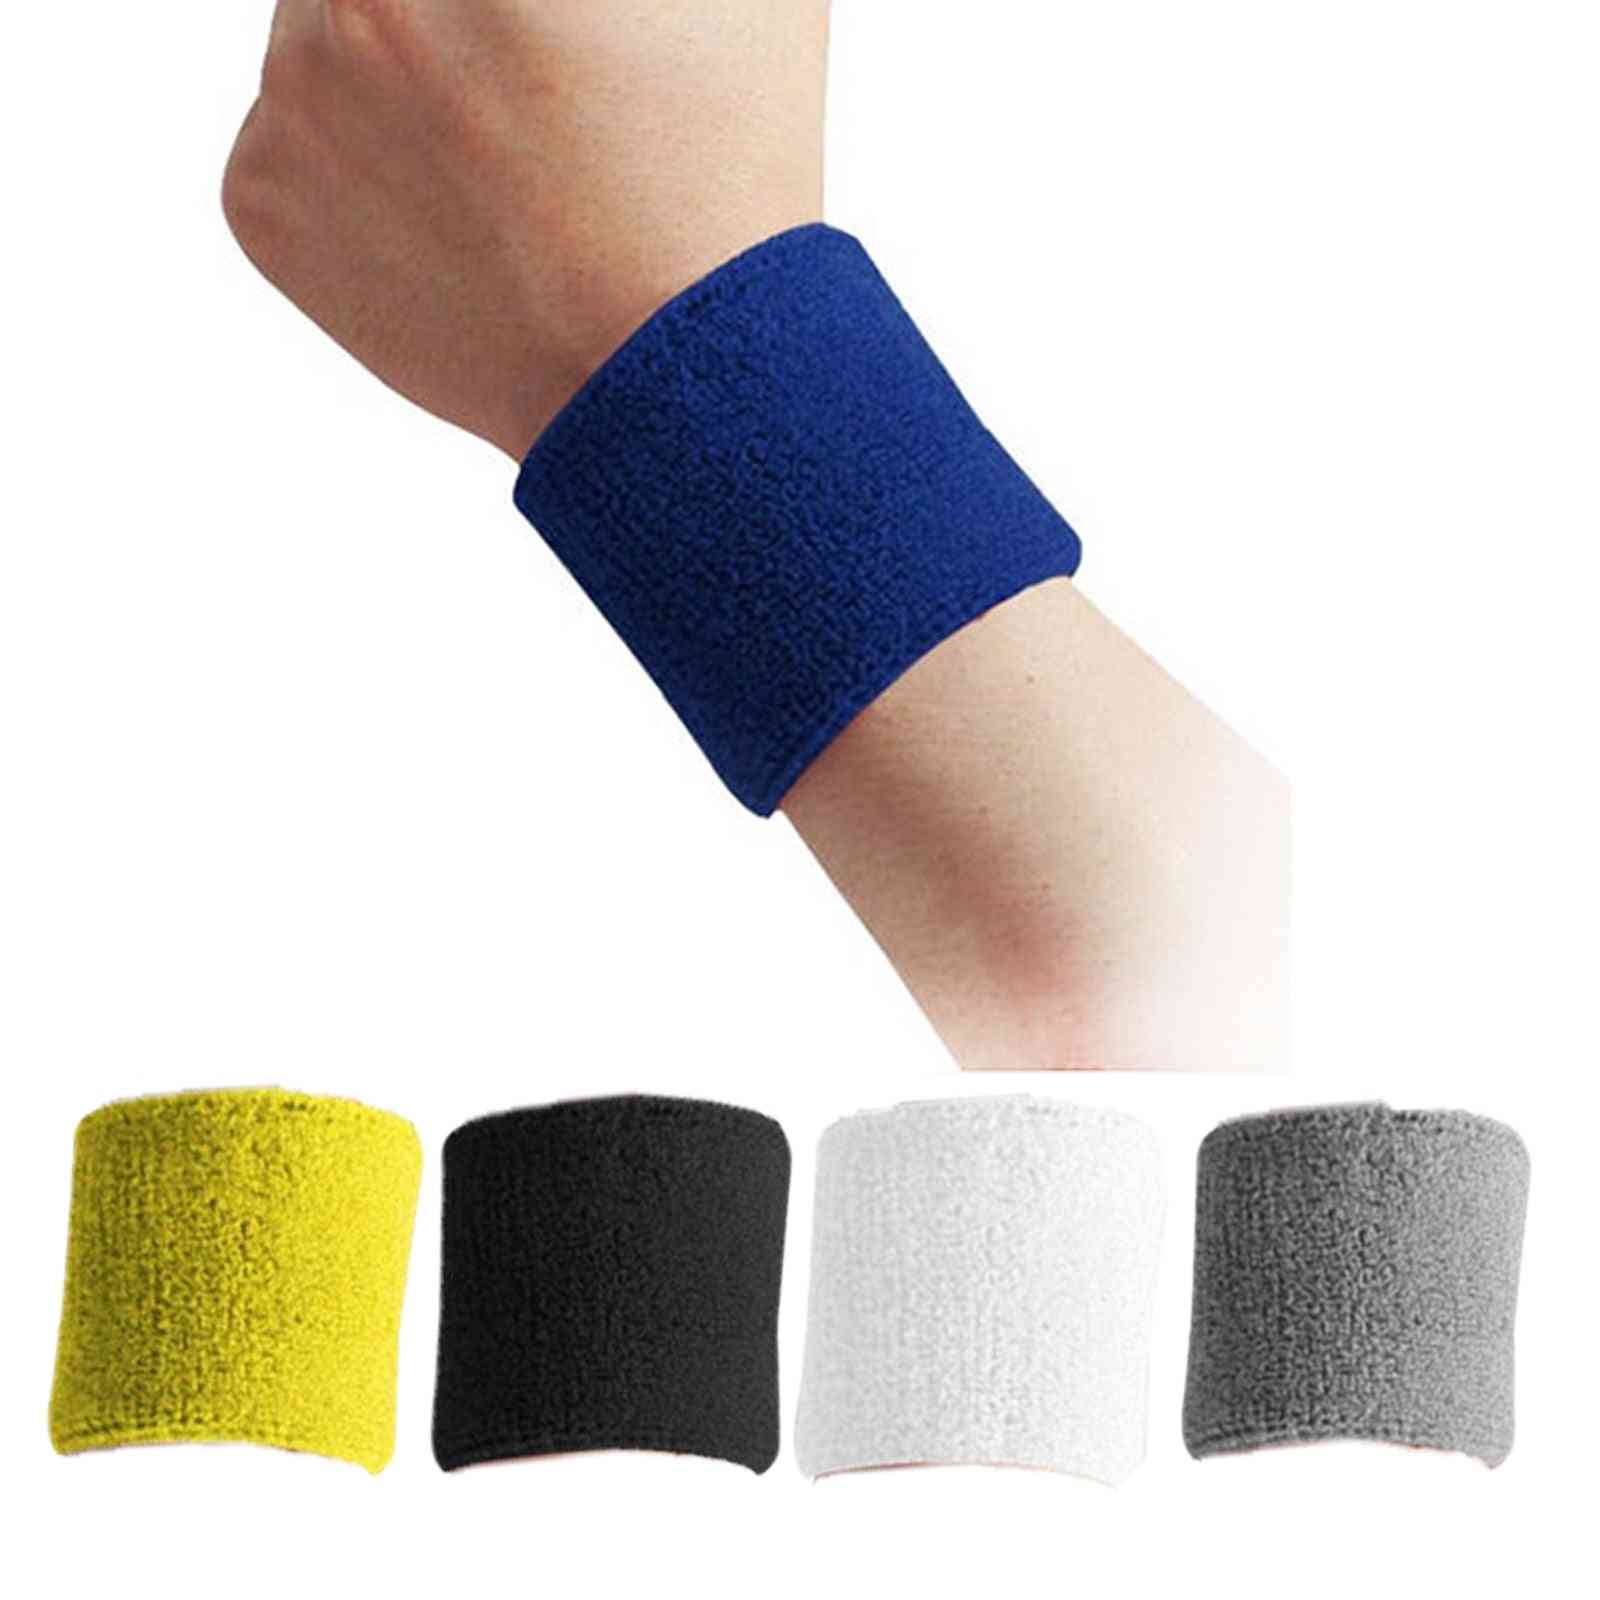 Cotton Wristbands Sport & Wrist Support Brace Wraps Guards